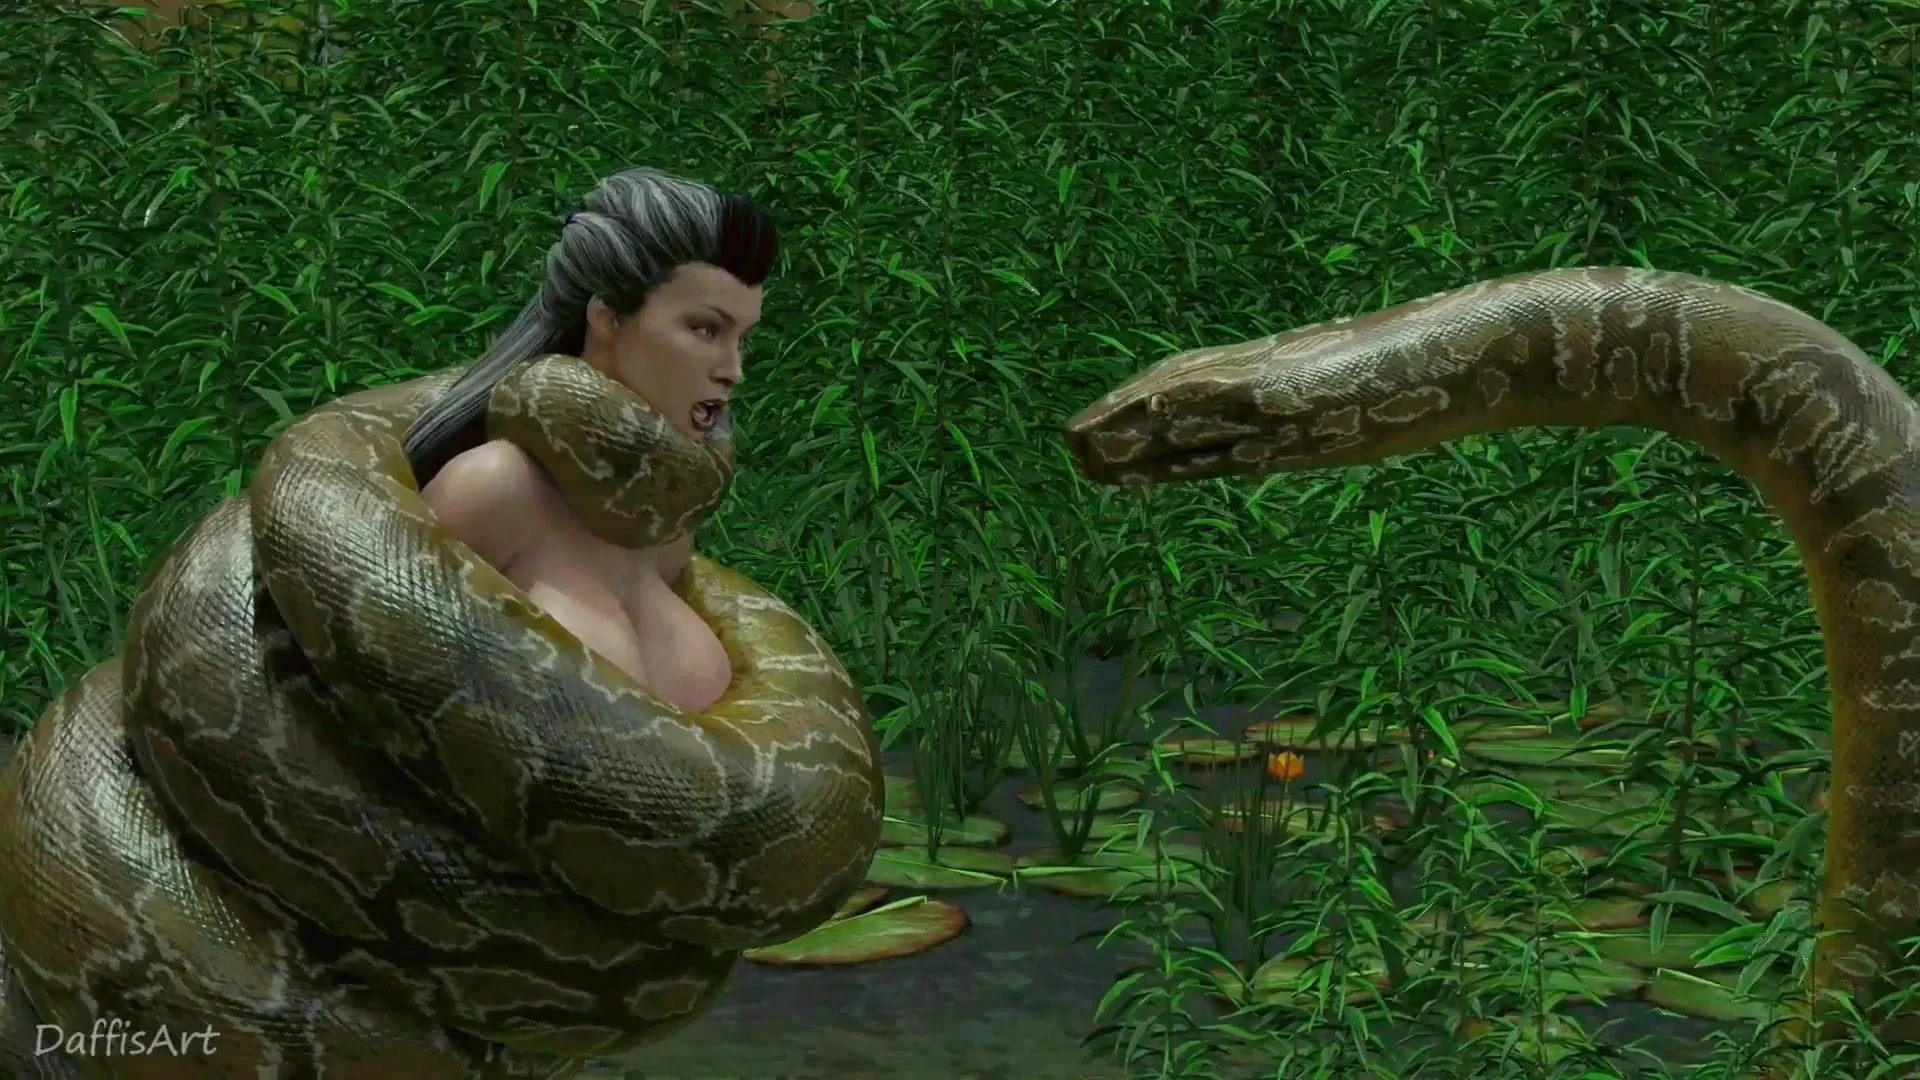 Snake vs image